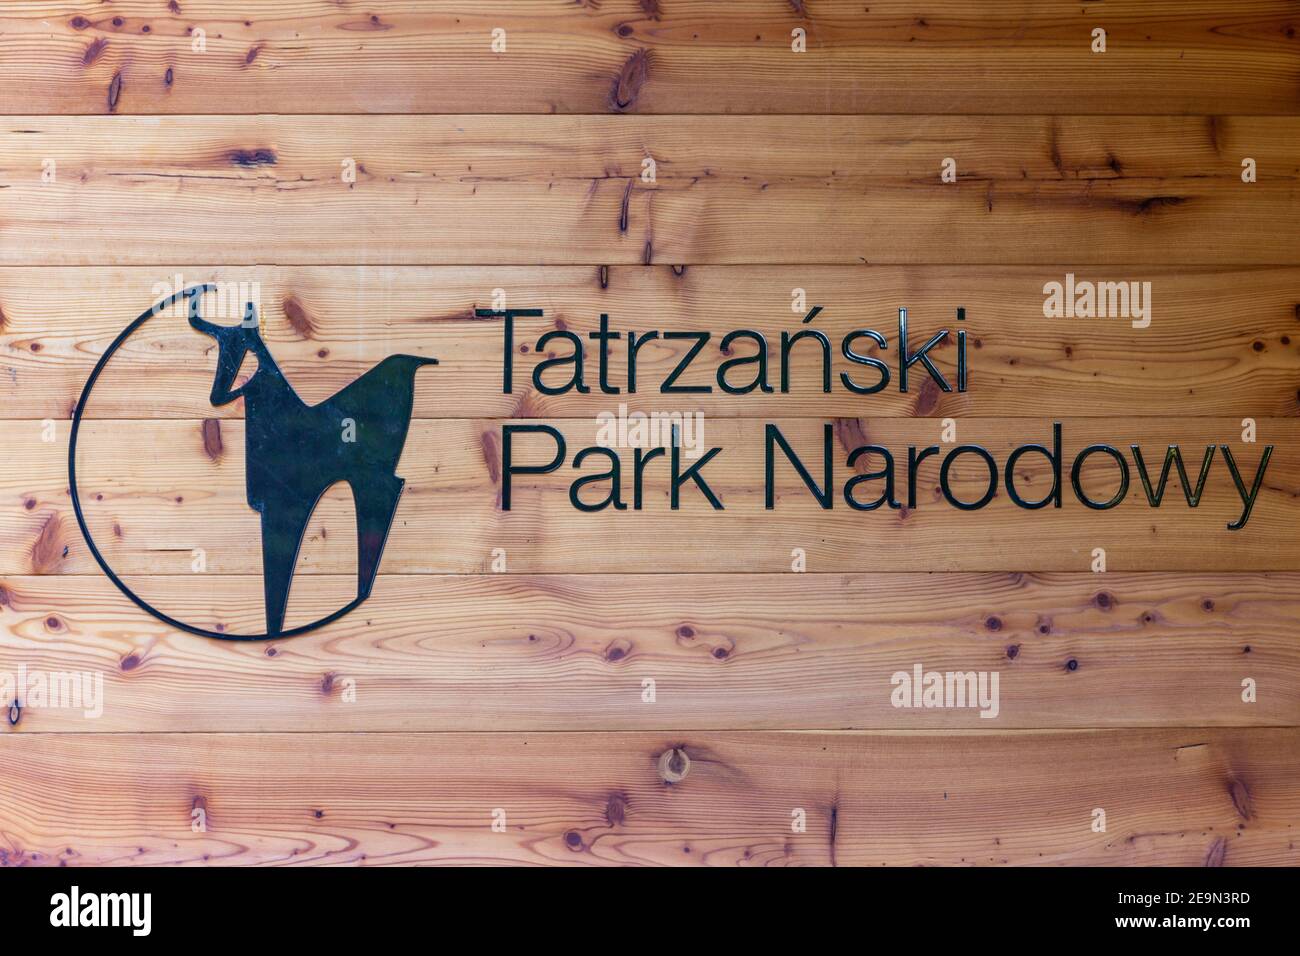 Tatra National Park, Poland, 23/09/2020. Tatra National Park (Tatrzanski Park Narodowy) black sign - logo and caption on a brown wooden background Stock Photo